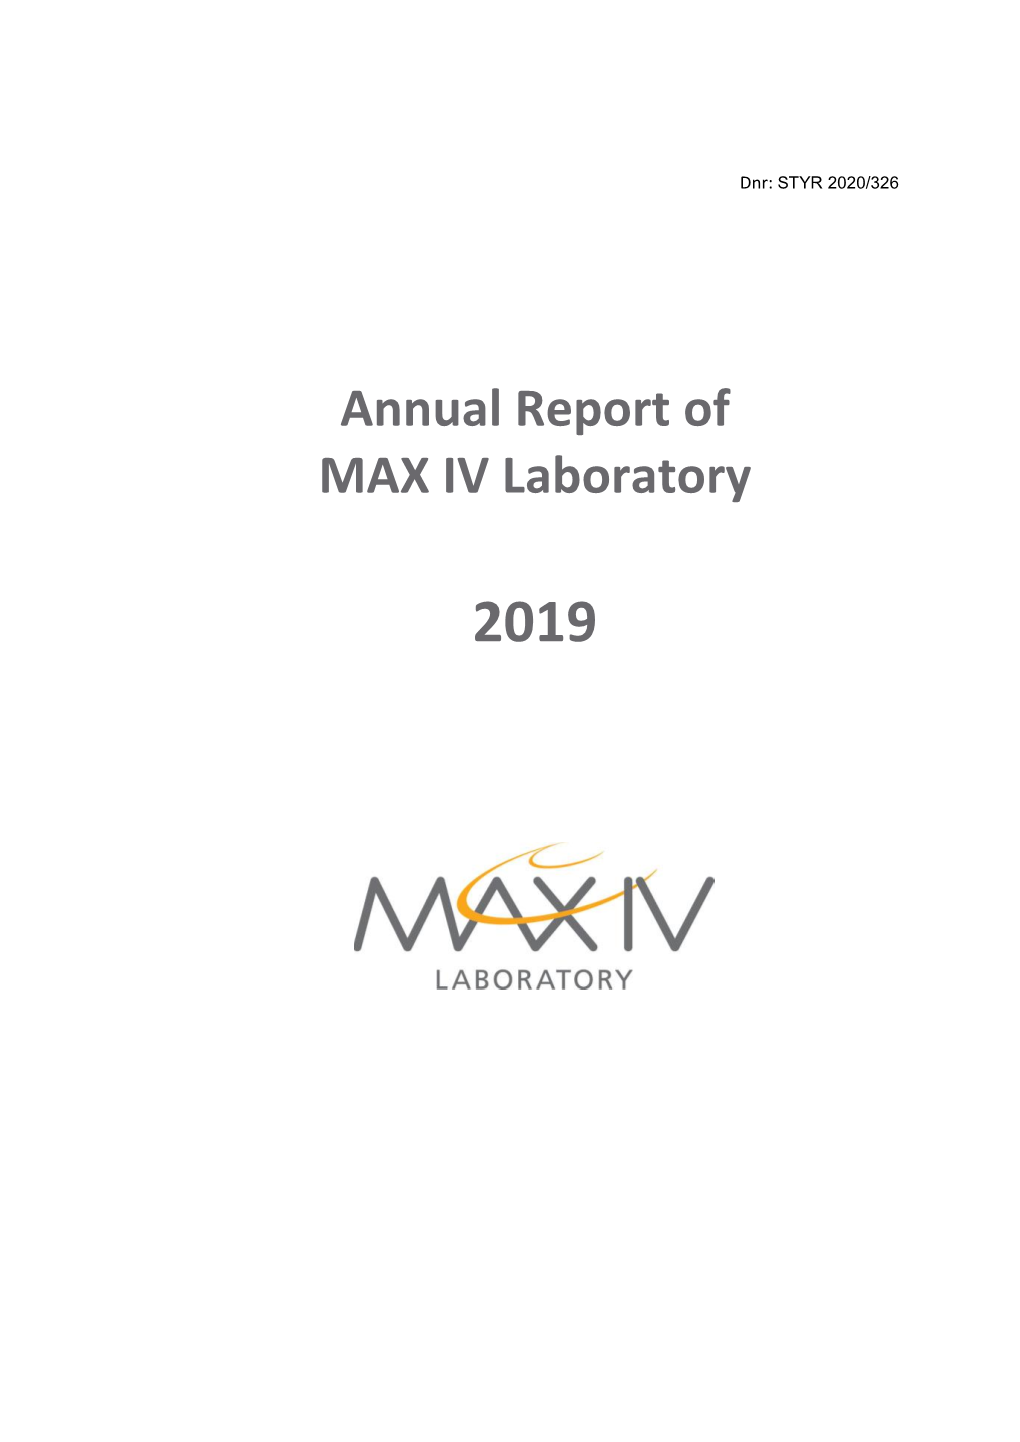 Annual Report of MAX IV Laboratory